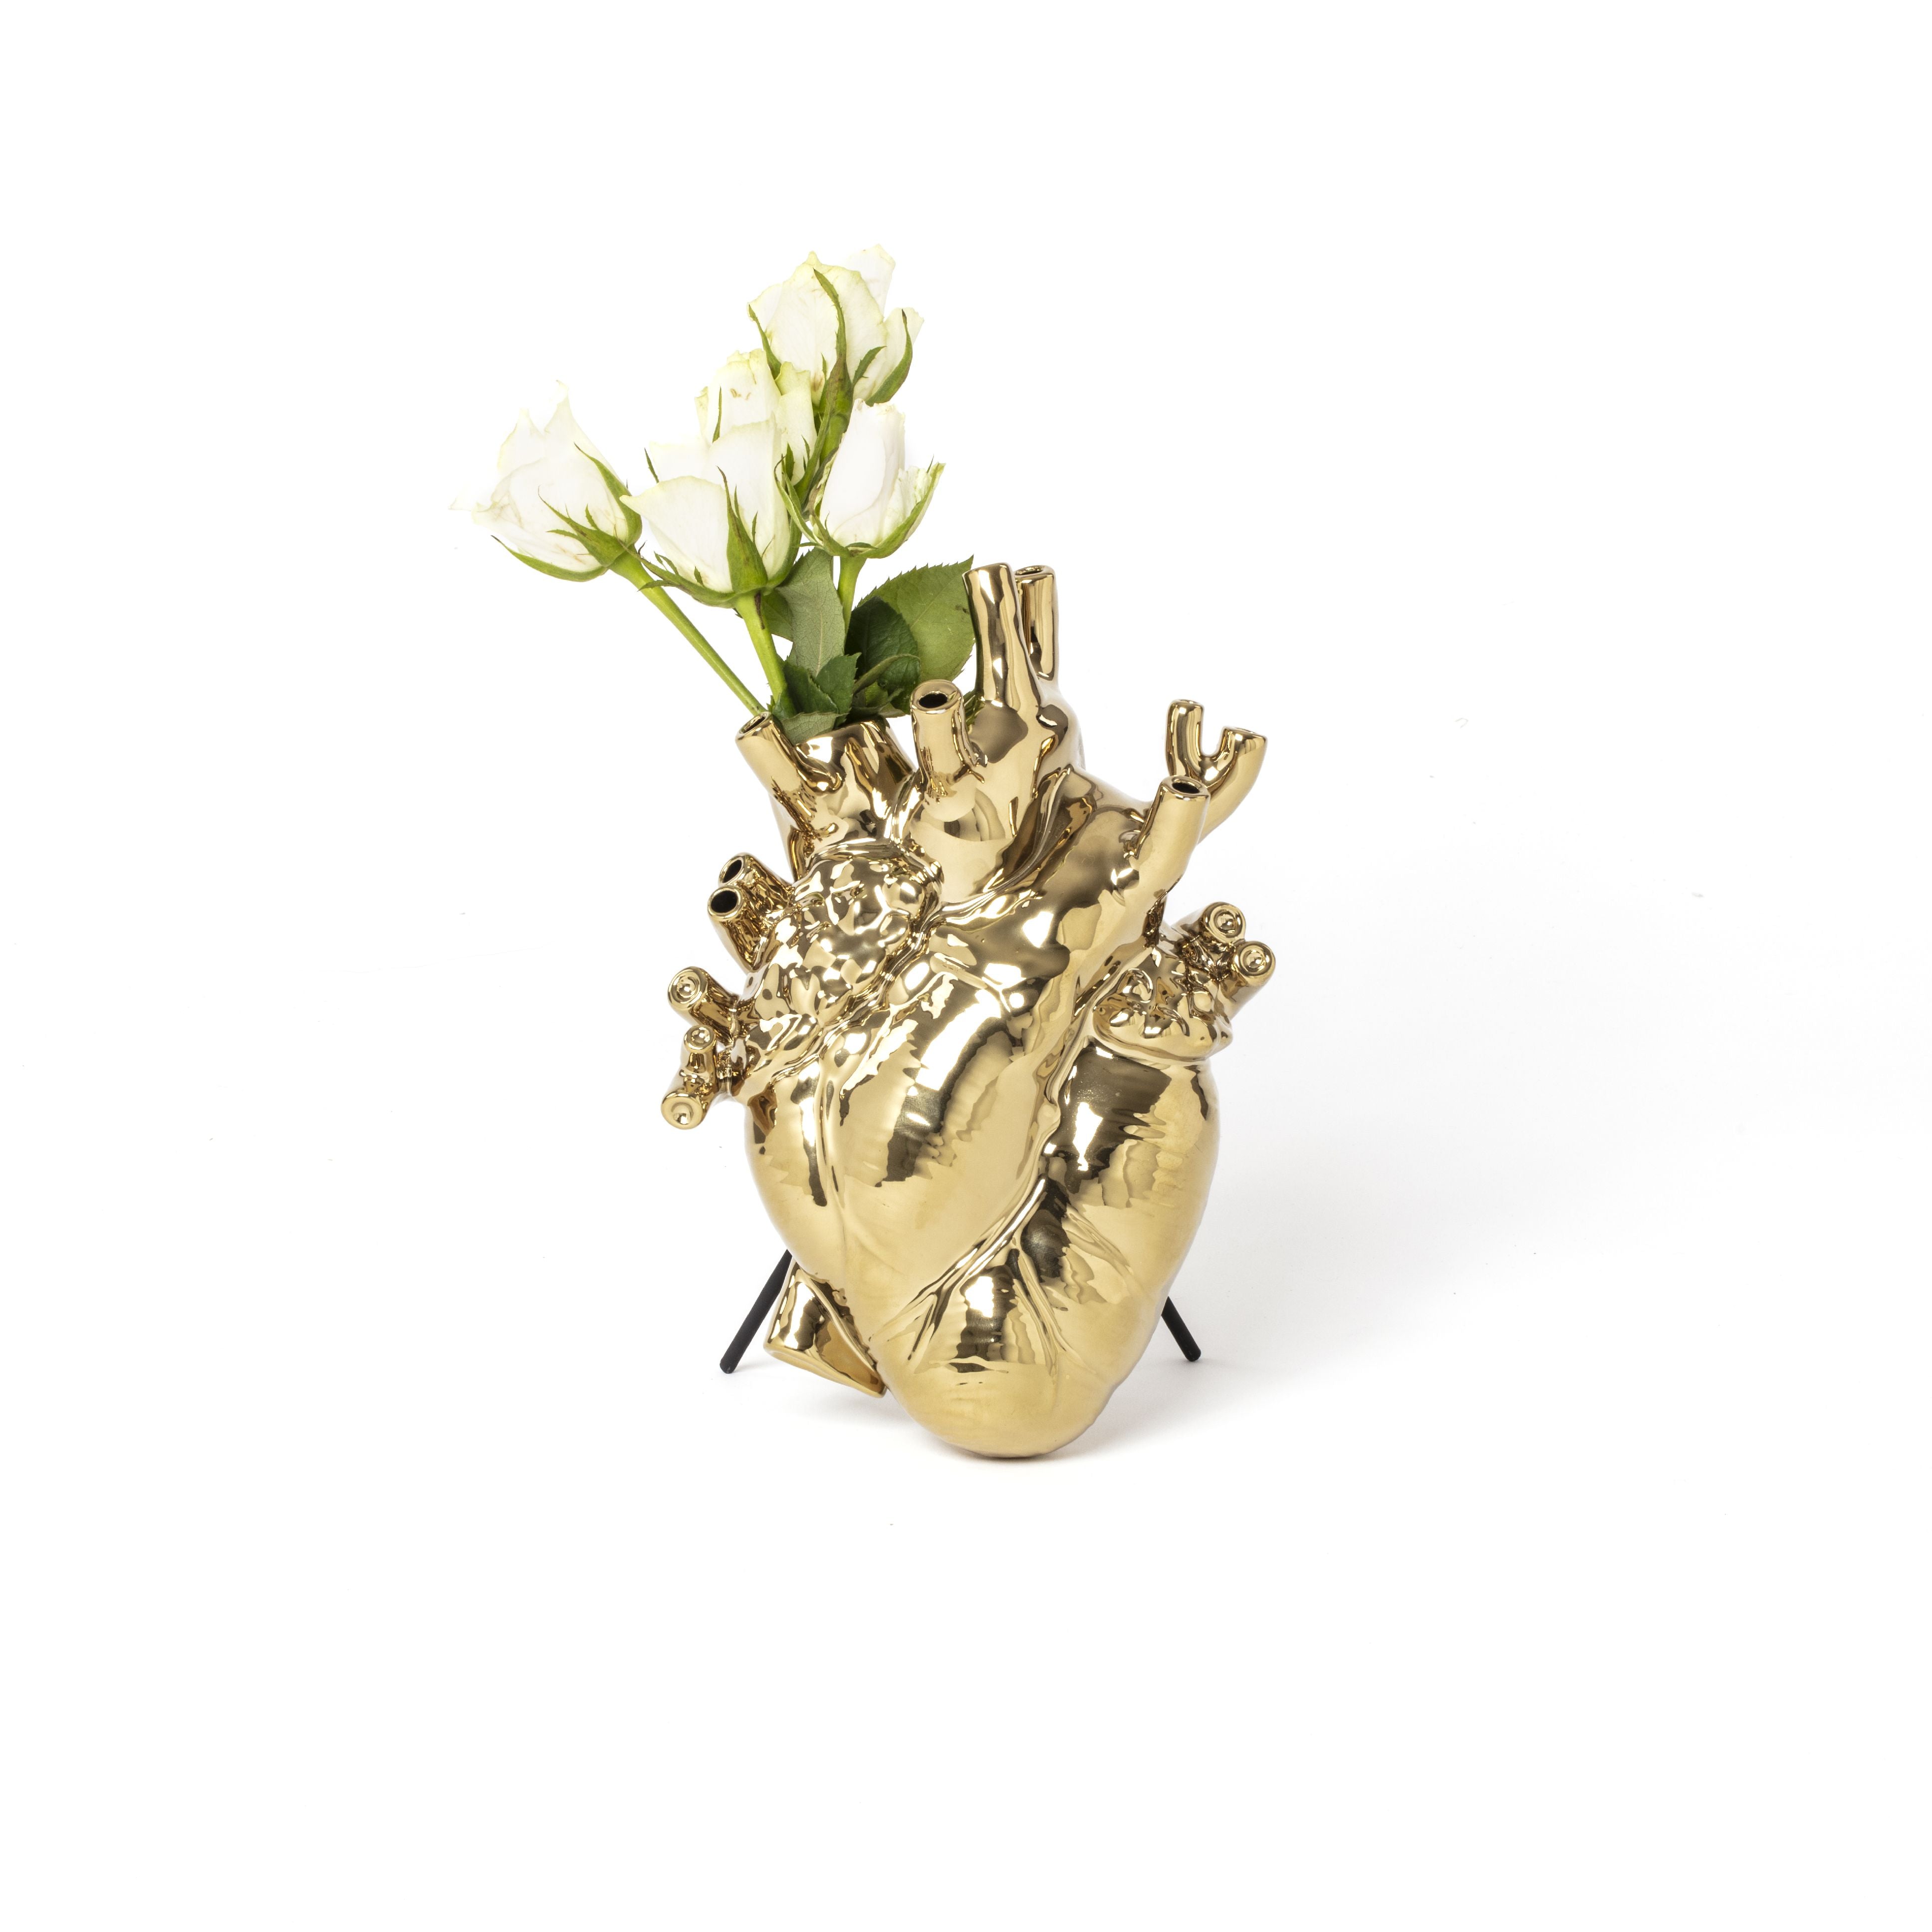 Seletti Liebe in Bloom Vase, Gold